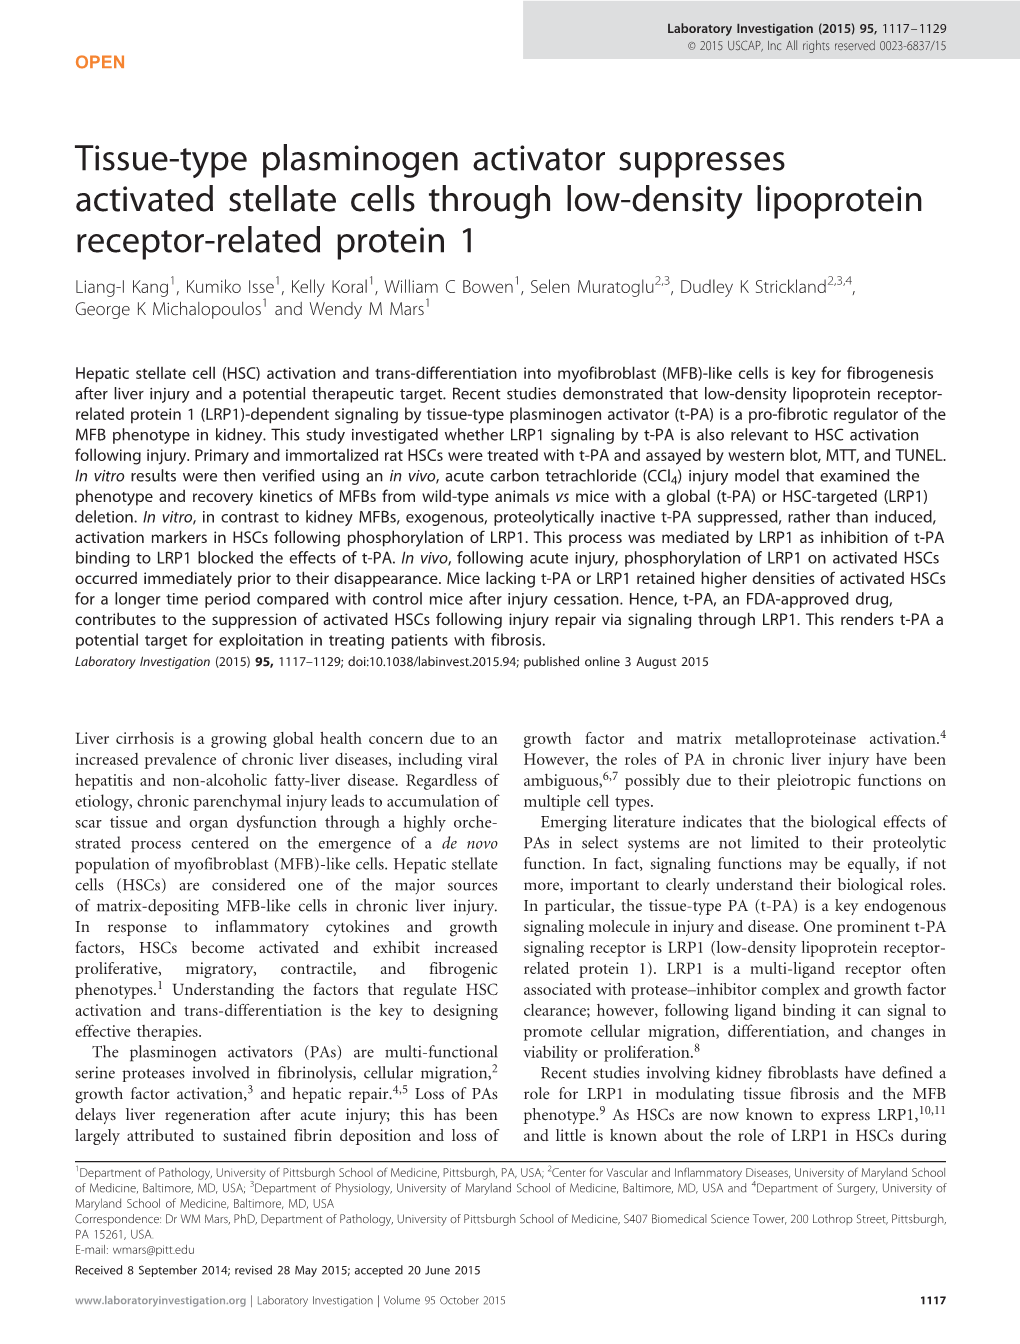 Tissue-Type Plasminogen Activator Suppresses Activated Stellate Cells